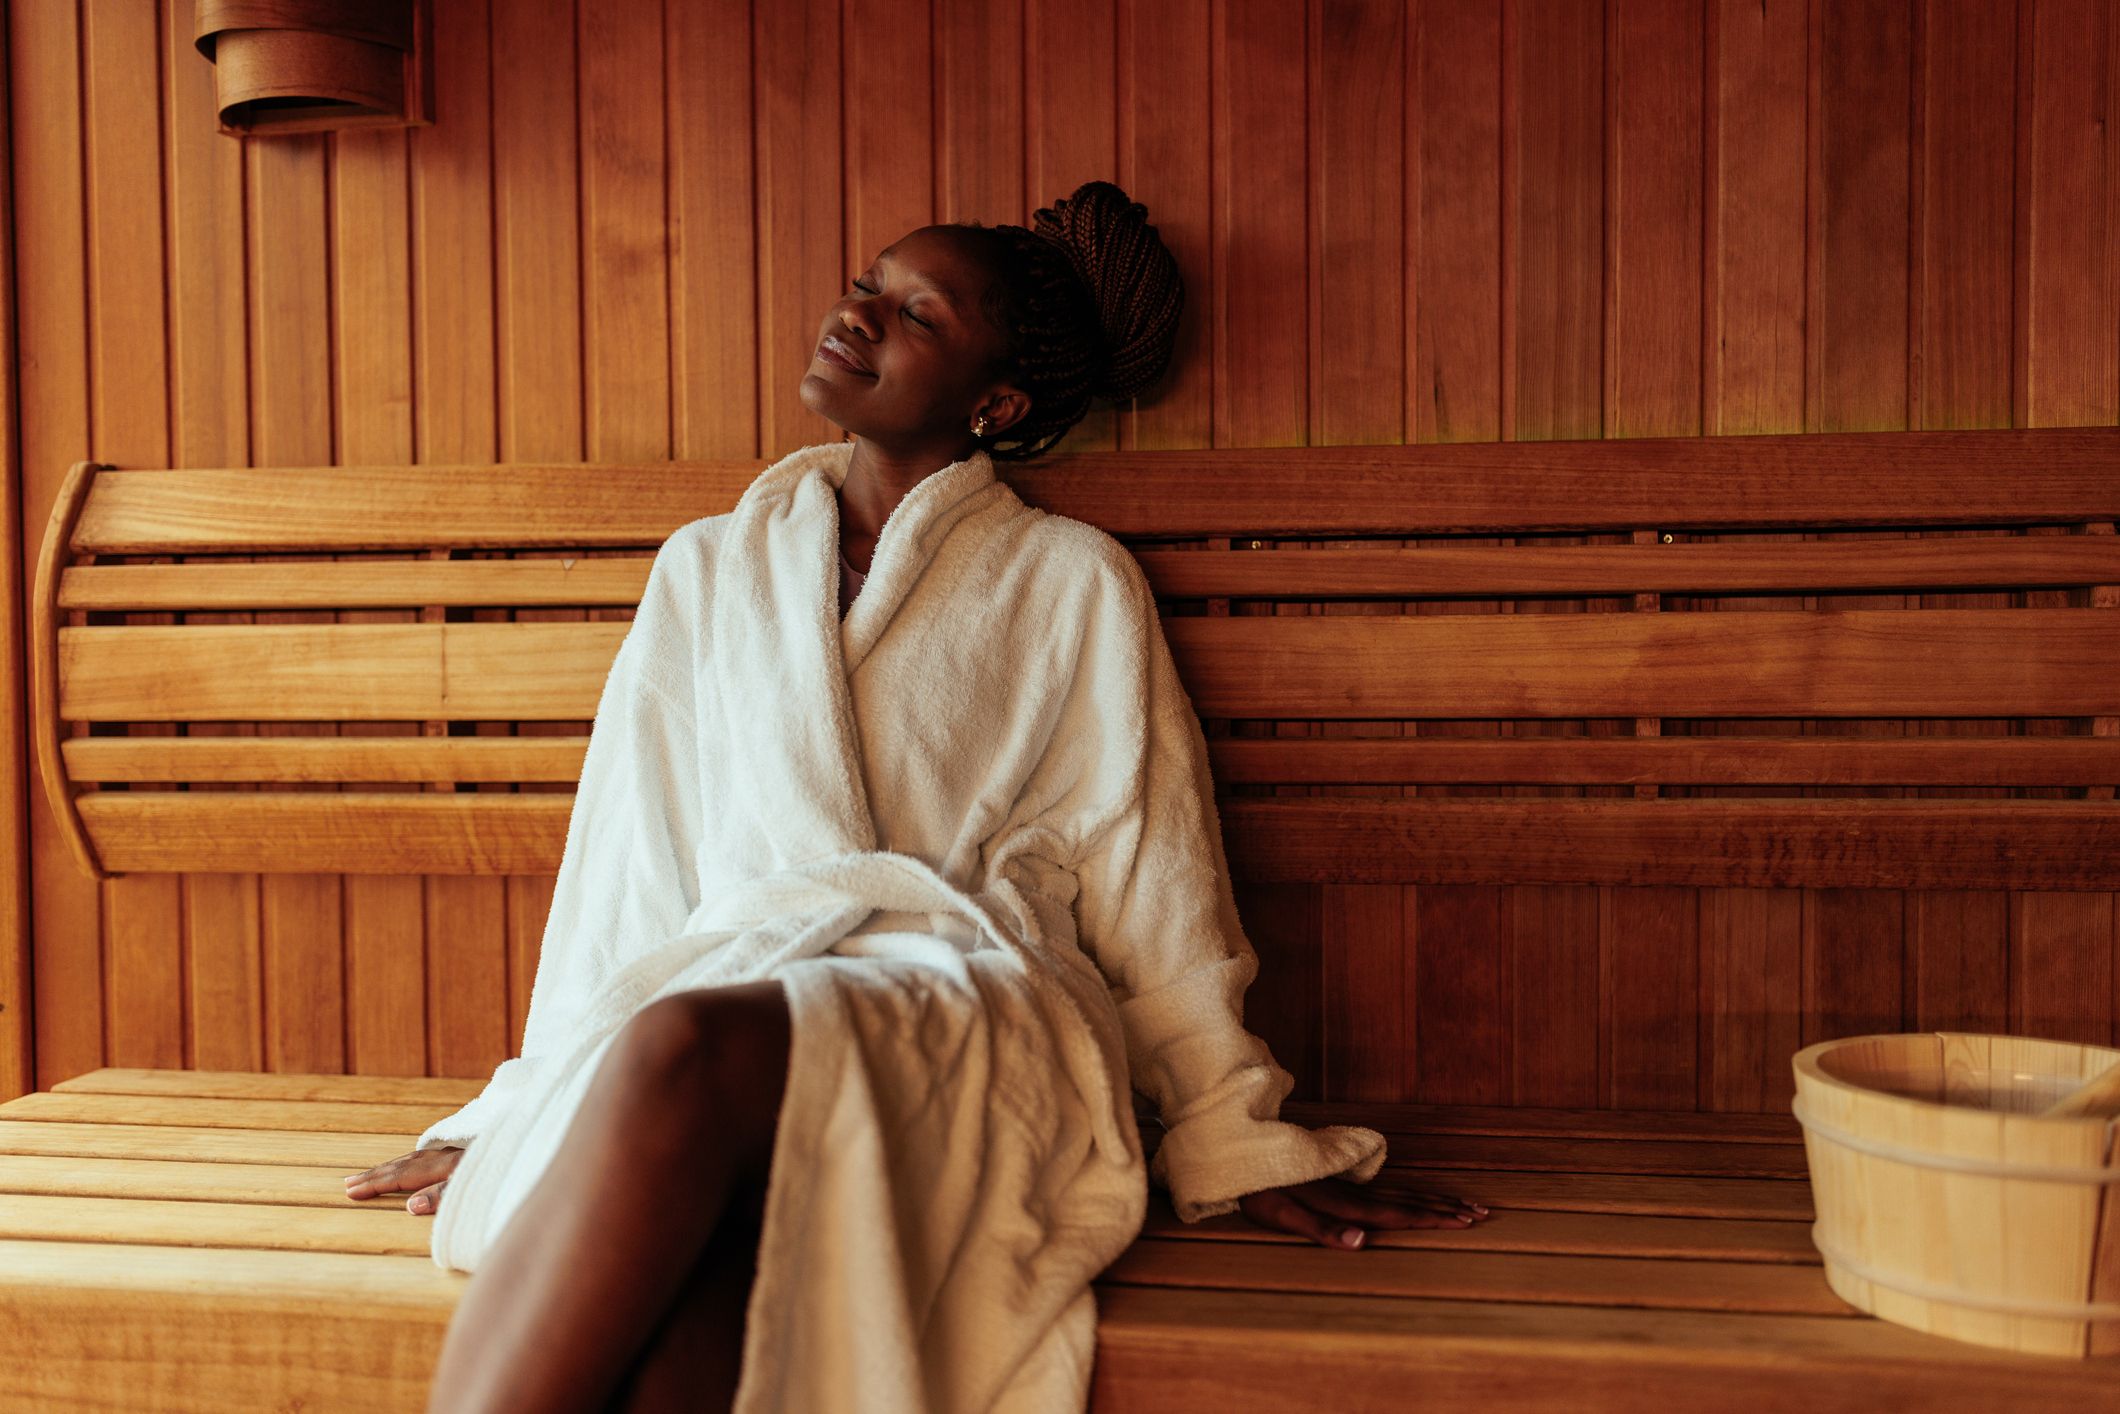 11 Best Sauna Benefits For Your Health, According To Doctors